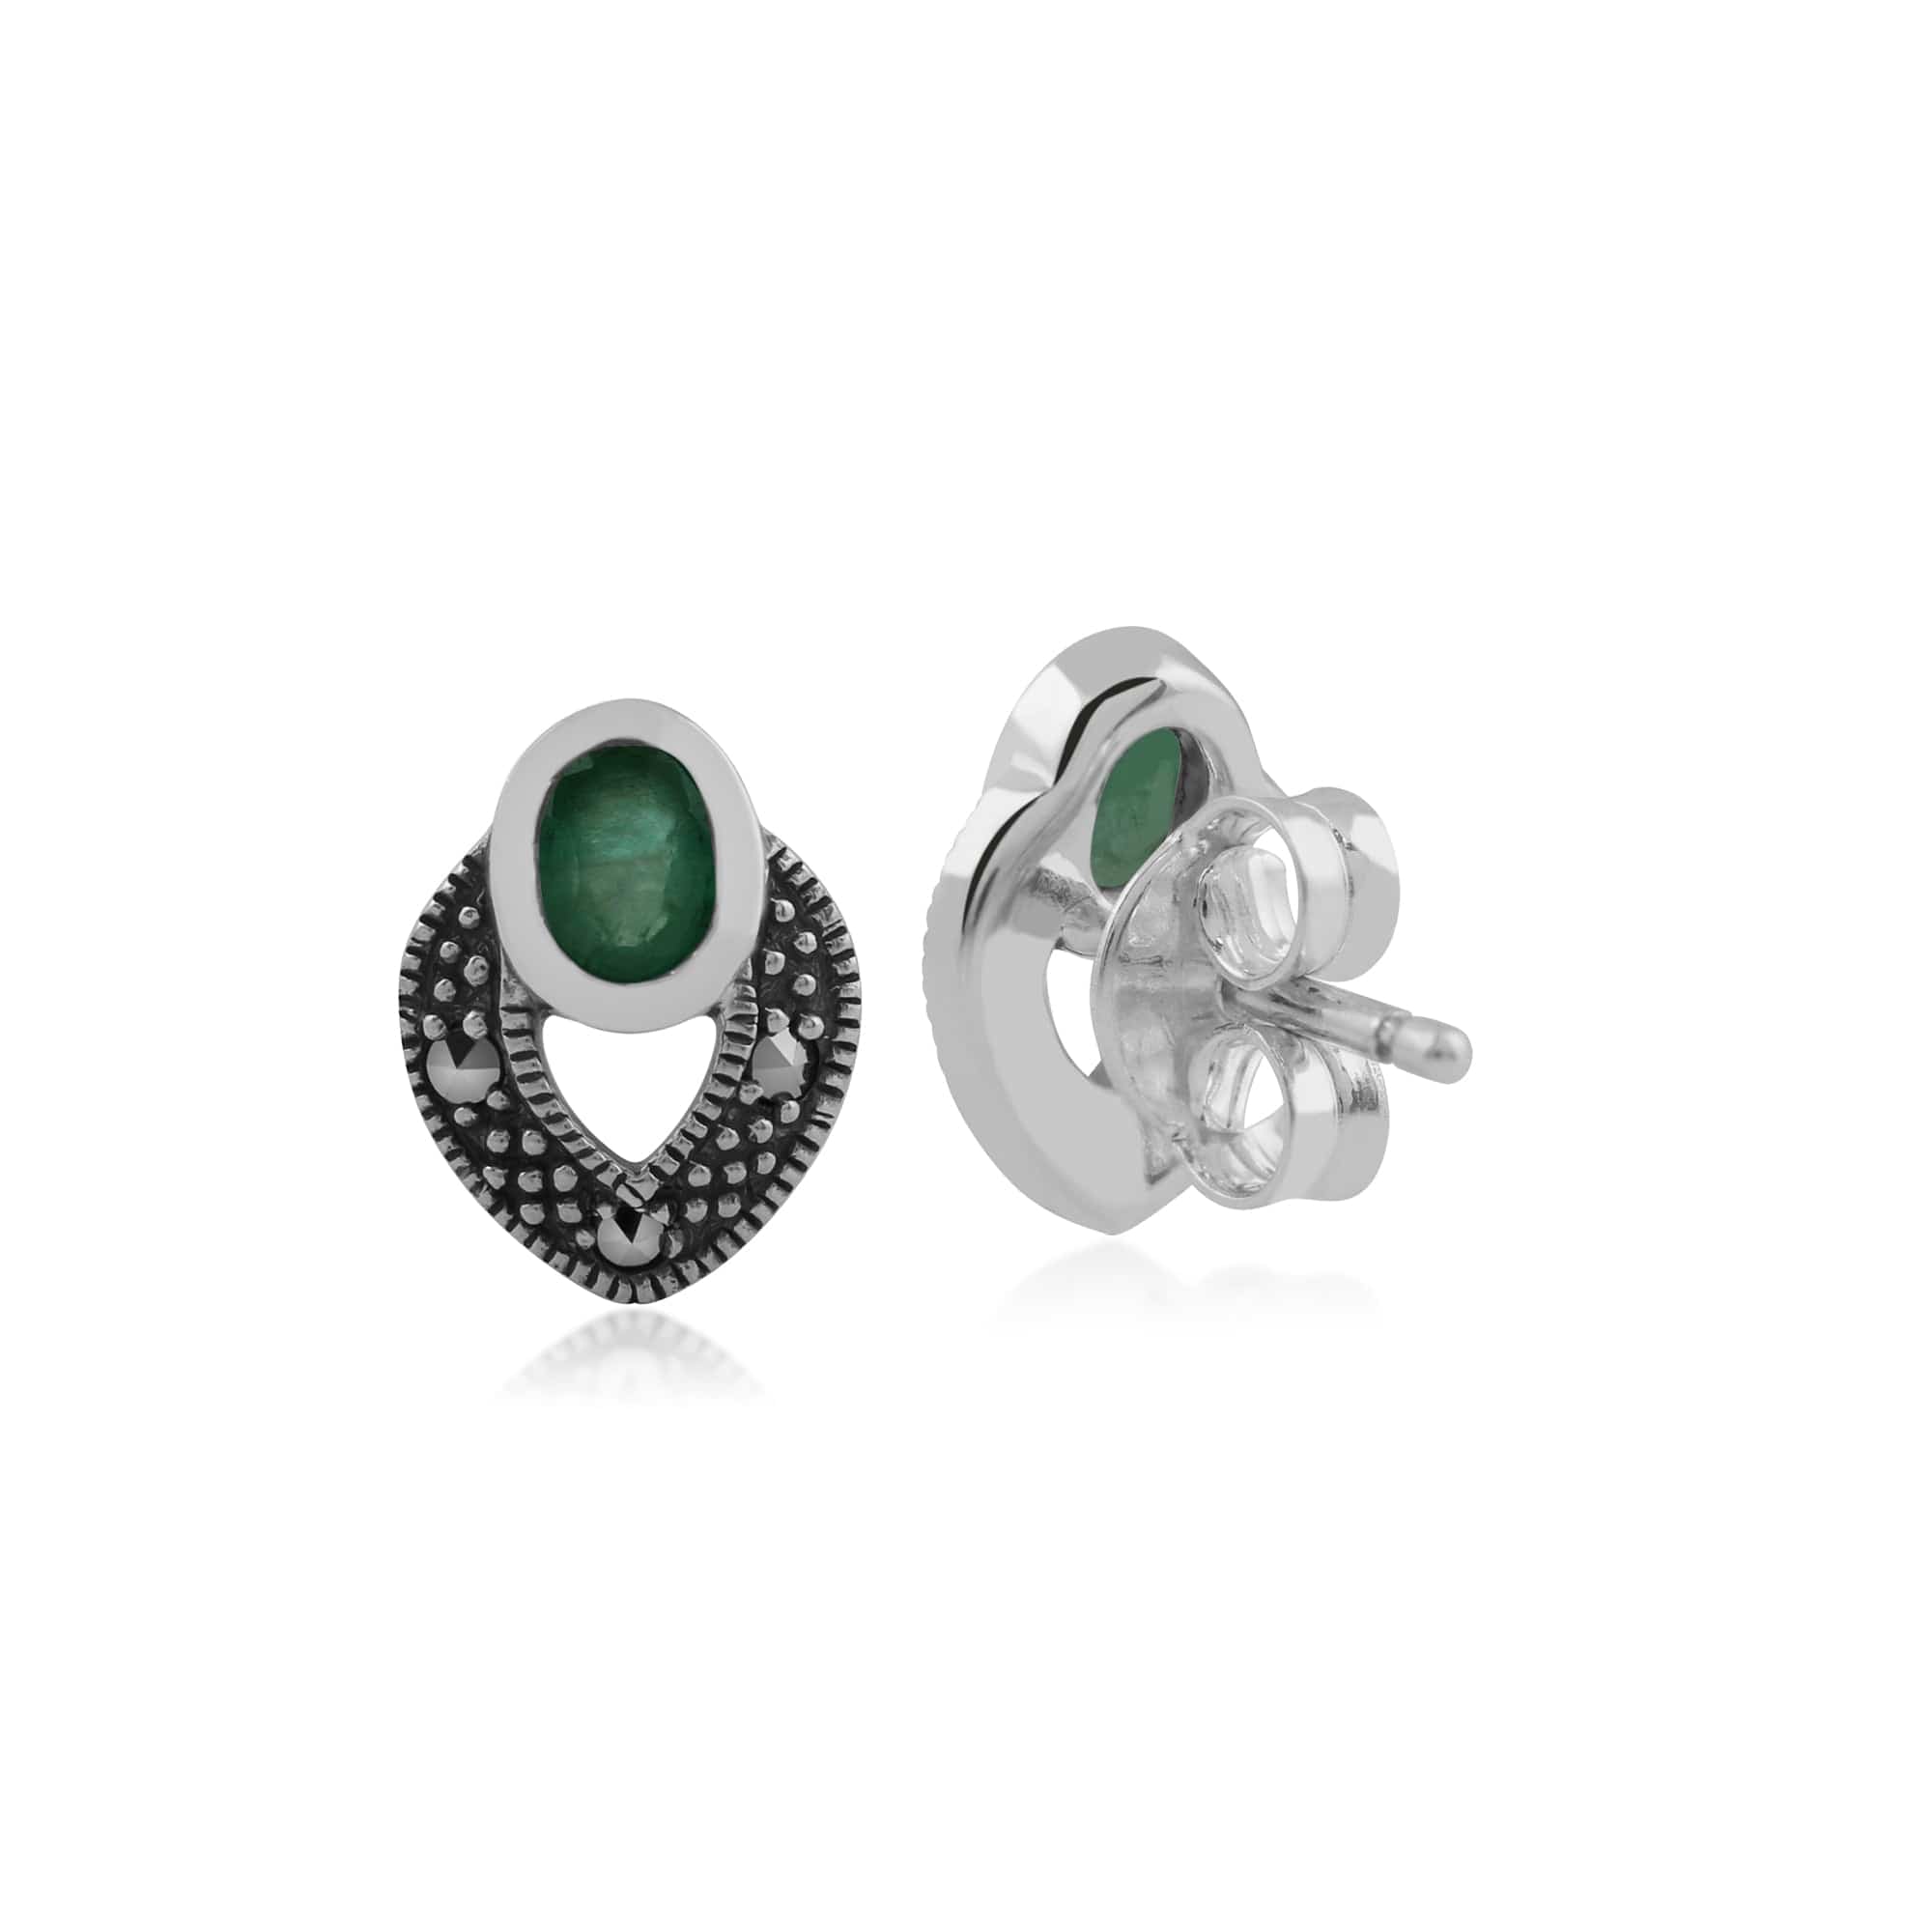 214E717808925 Art Deco Style Oval Emerald & Marcasite Stud Earrings in 925 Sterling Silver 2